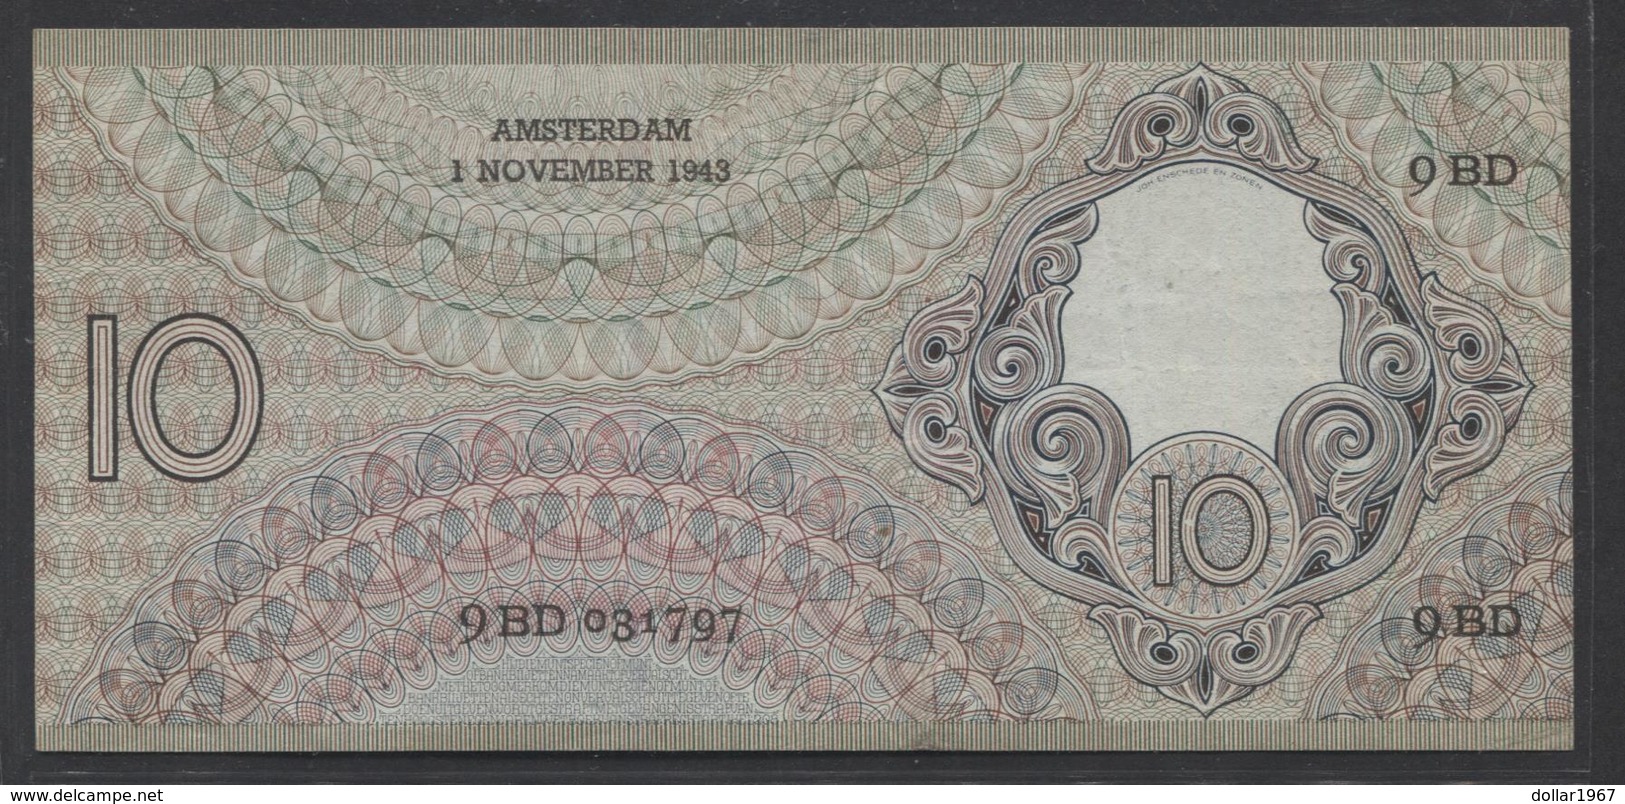 Netherlands 10 Gulden 4-1-1943 -22-4-1944 , No 9 BD 031797 - 01-11-1943, - See The 2 Scans For Condition.(Originalscan ) - 10 Florín Holandés (gulden)